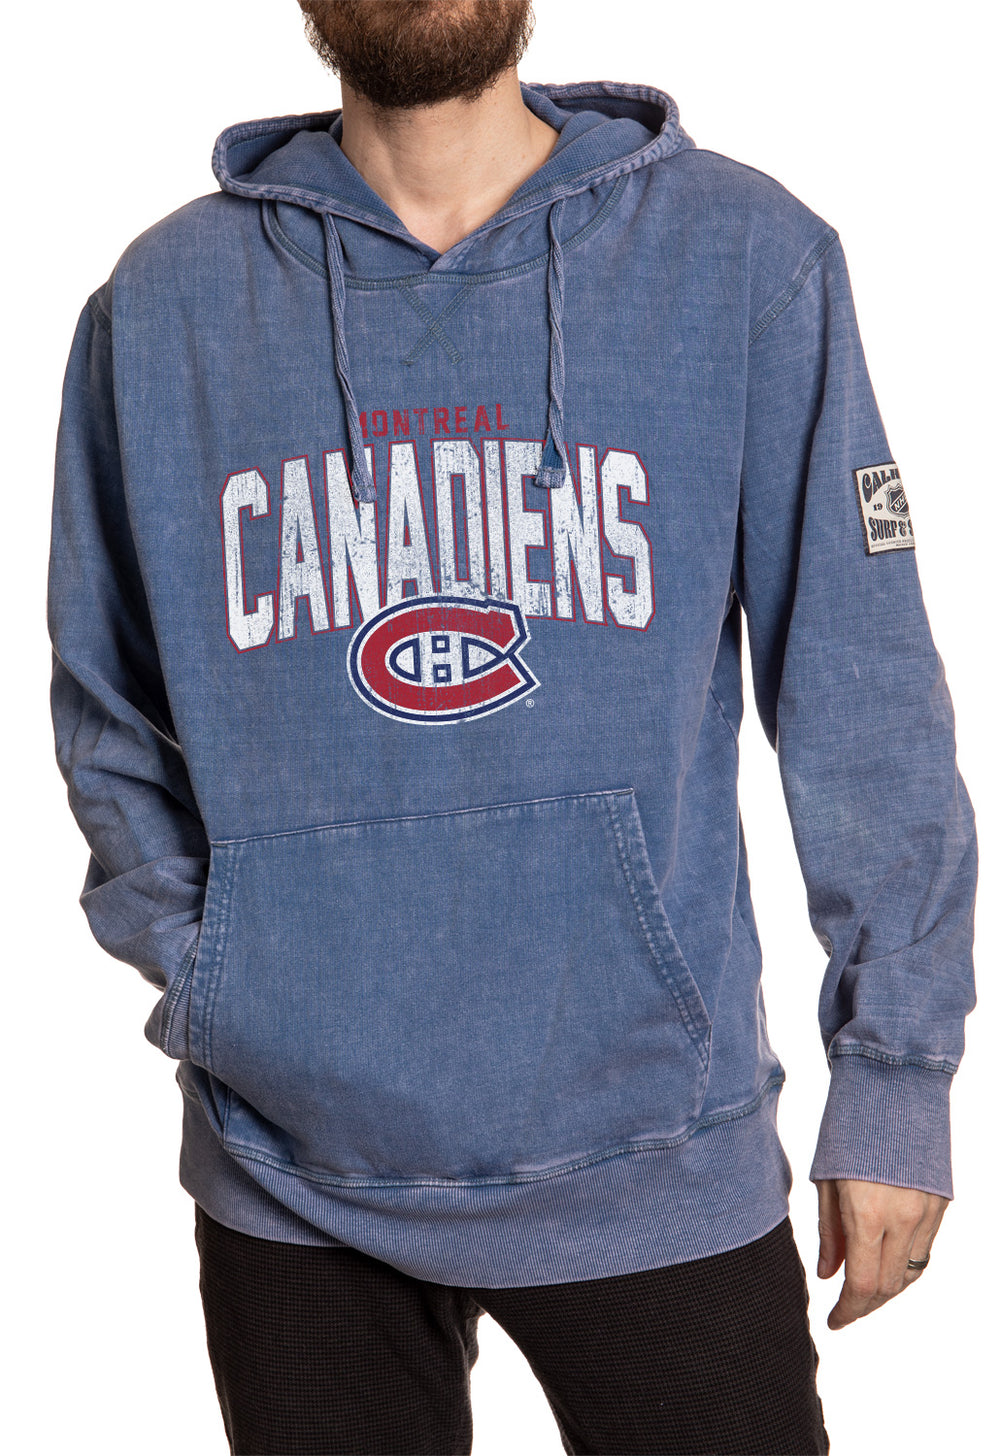 Montreal Canadiens Acid Wash Hoodie in Blue Front View